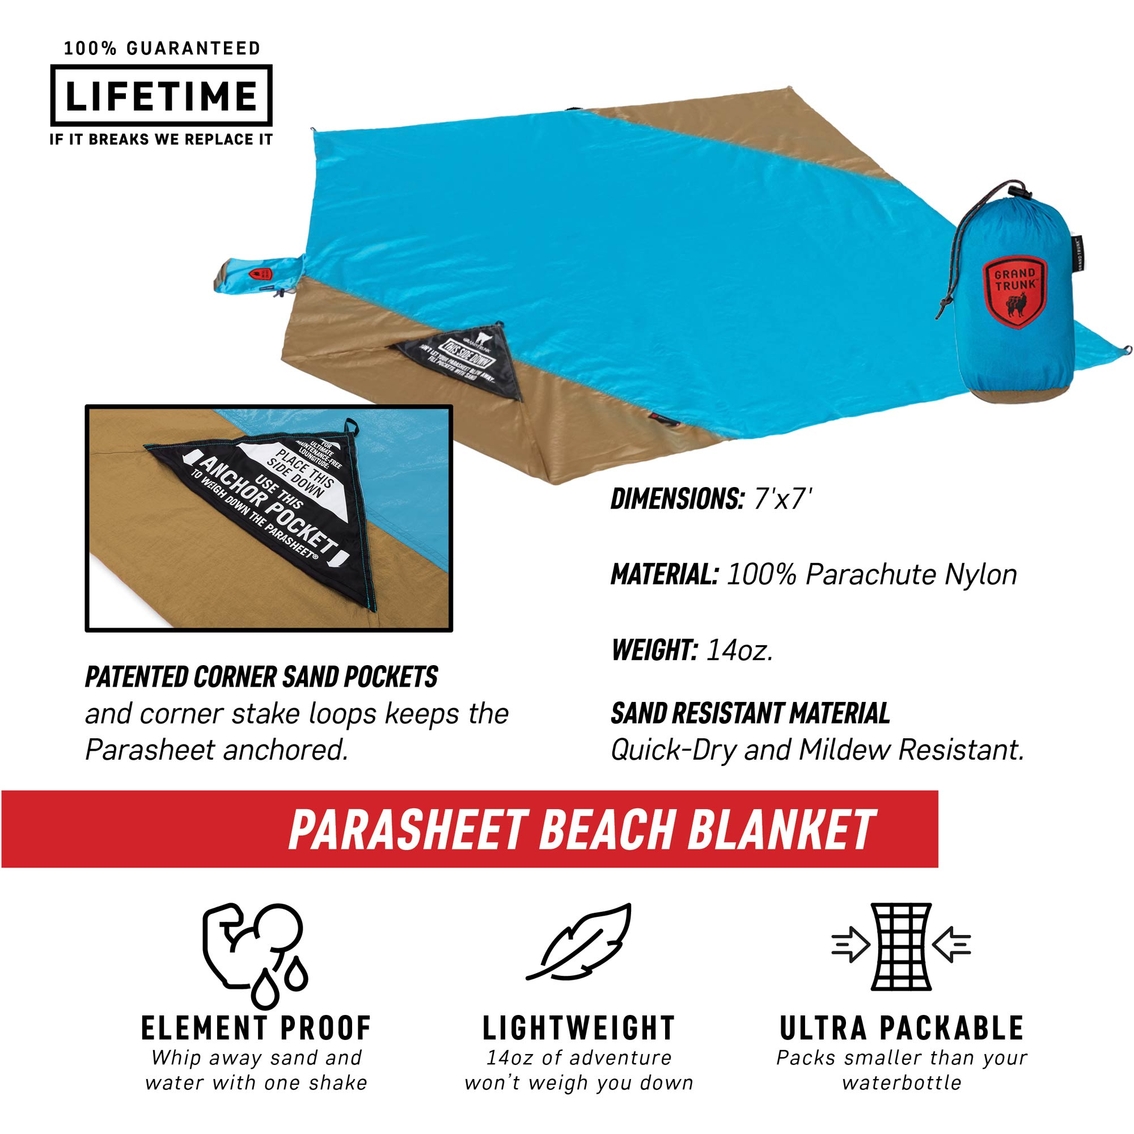 Grand Trunk Parasheet Beach Blanket - Image 2 of 8